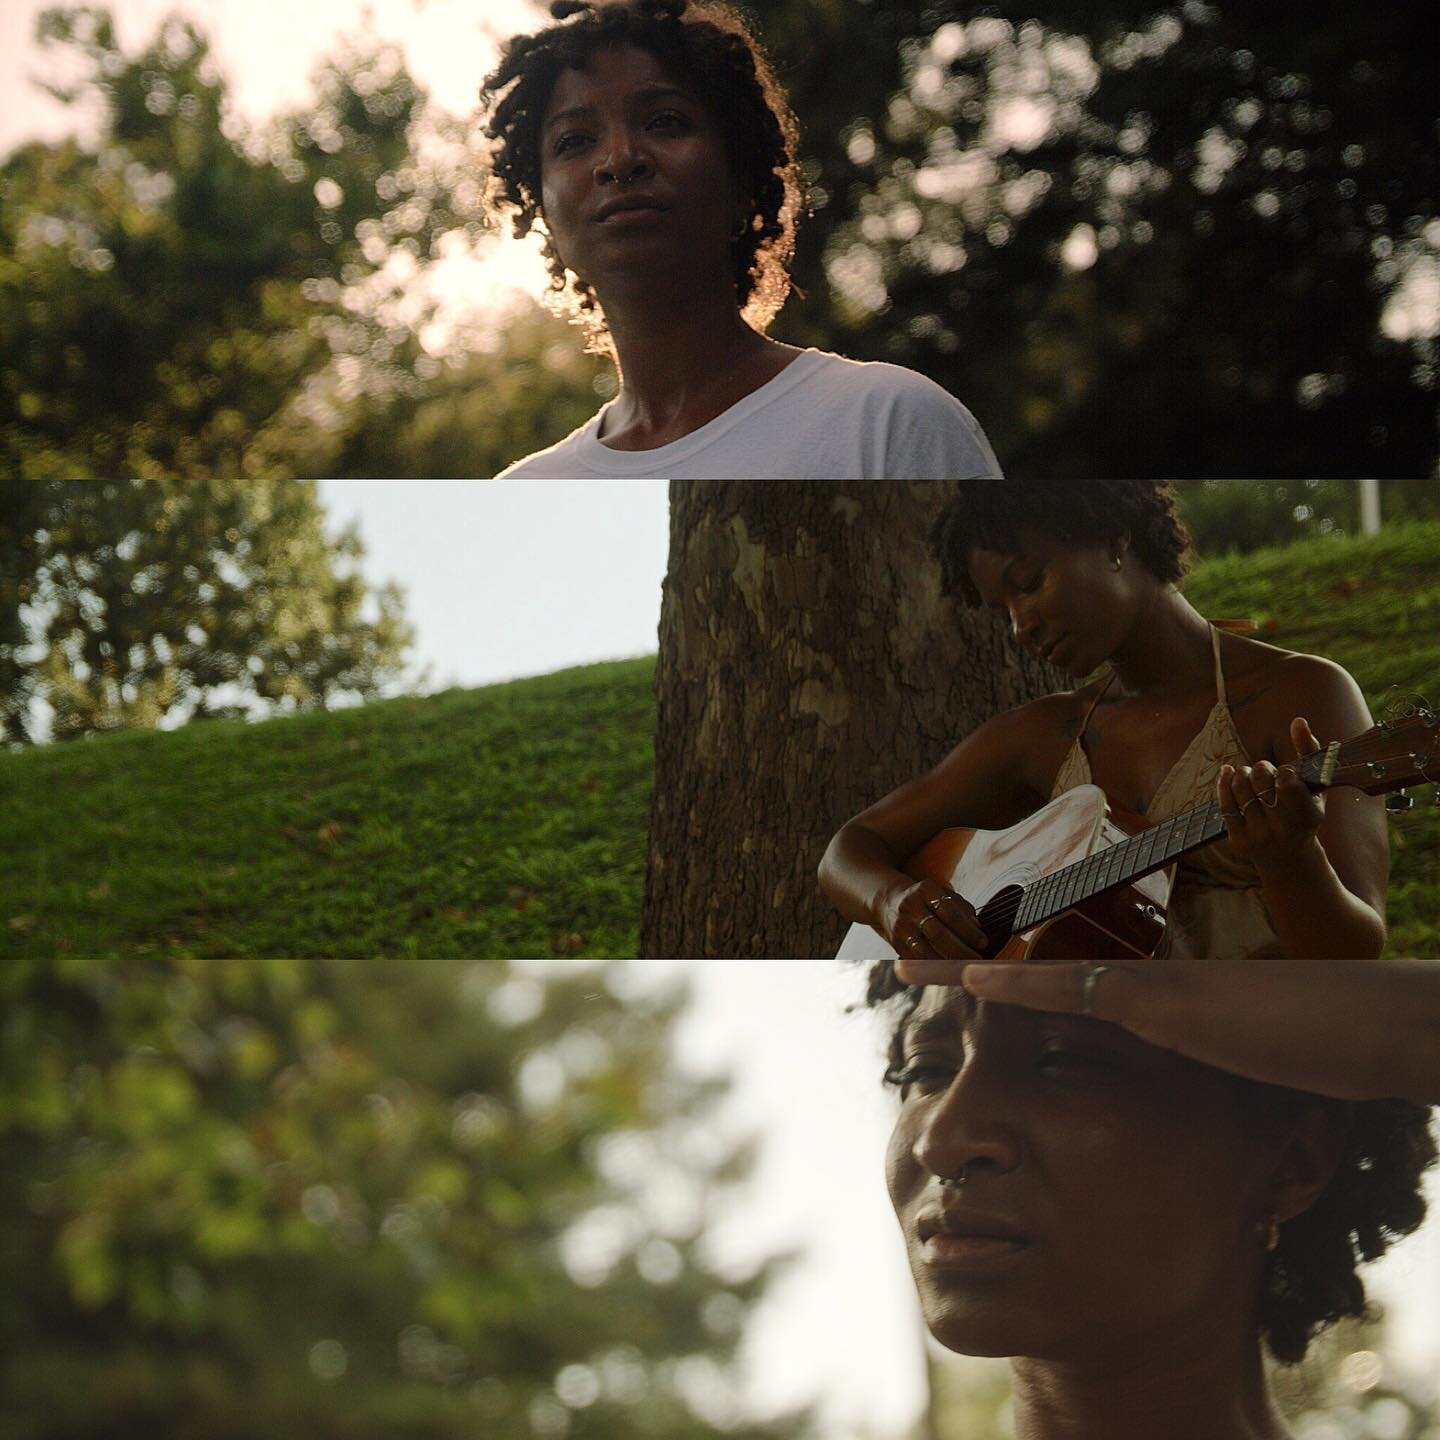 Visions, a video with @leahsimonemusic 
Grip/AC: @yawnproductions_ 
Locations: Hygge Hill St &amp; Latta Park
.
.
#ursamini #ursaminipro #ursamini46k #davinciresolve #steadicam #dop #cinematography #musicvideoshoot #musicvideodirector #goldenhourligh